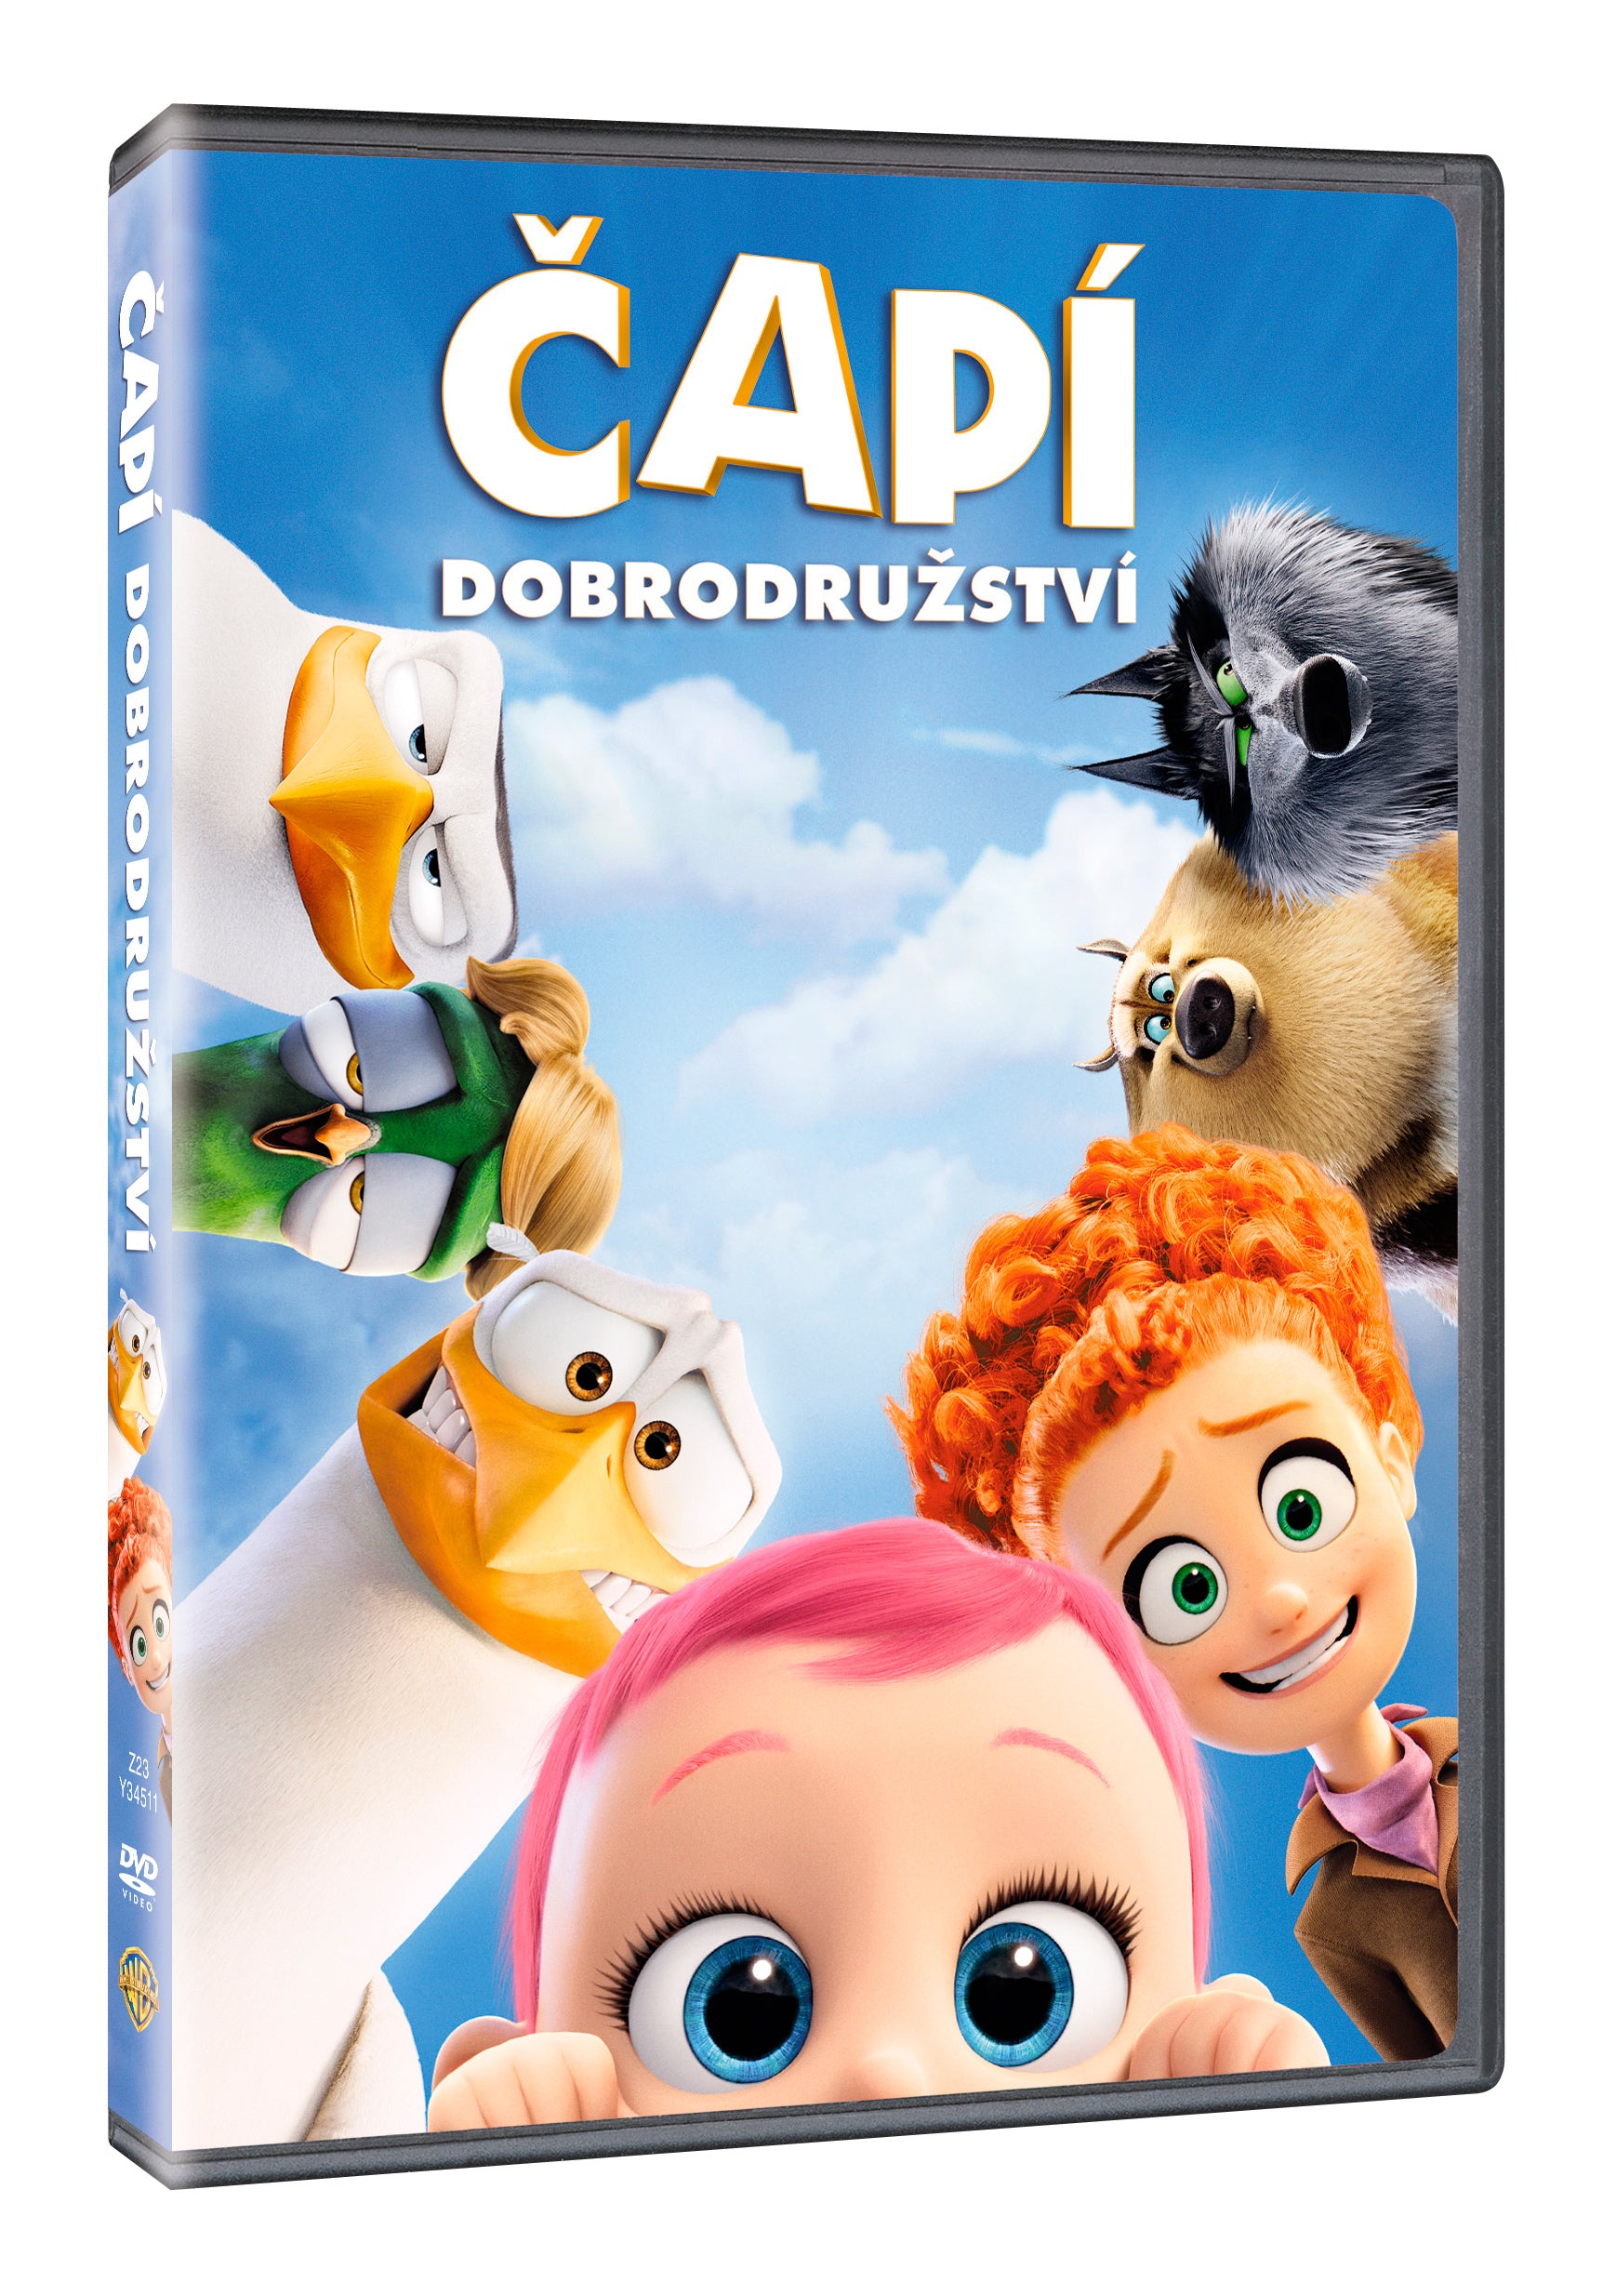 Capi dobrodruzstvi DVD / Störche